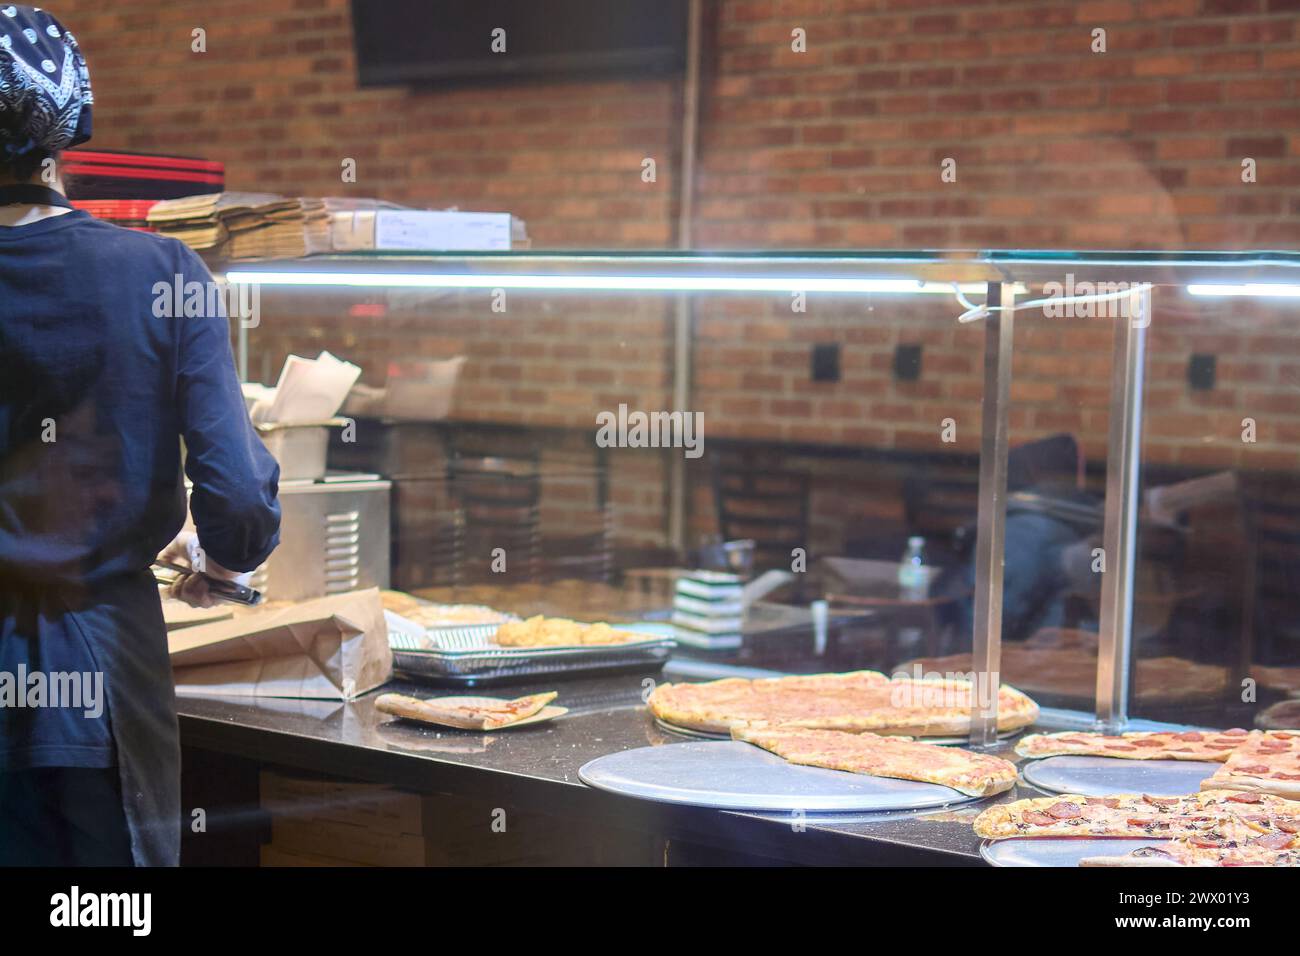 Lavoratrice in una pizzeria che prepara una varietà di pizze fresche da servire in un'atmosfera rustica e calda Foto Stock